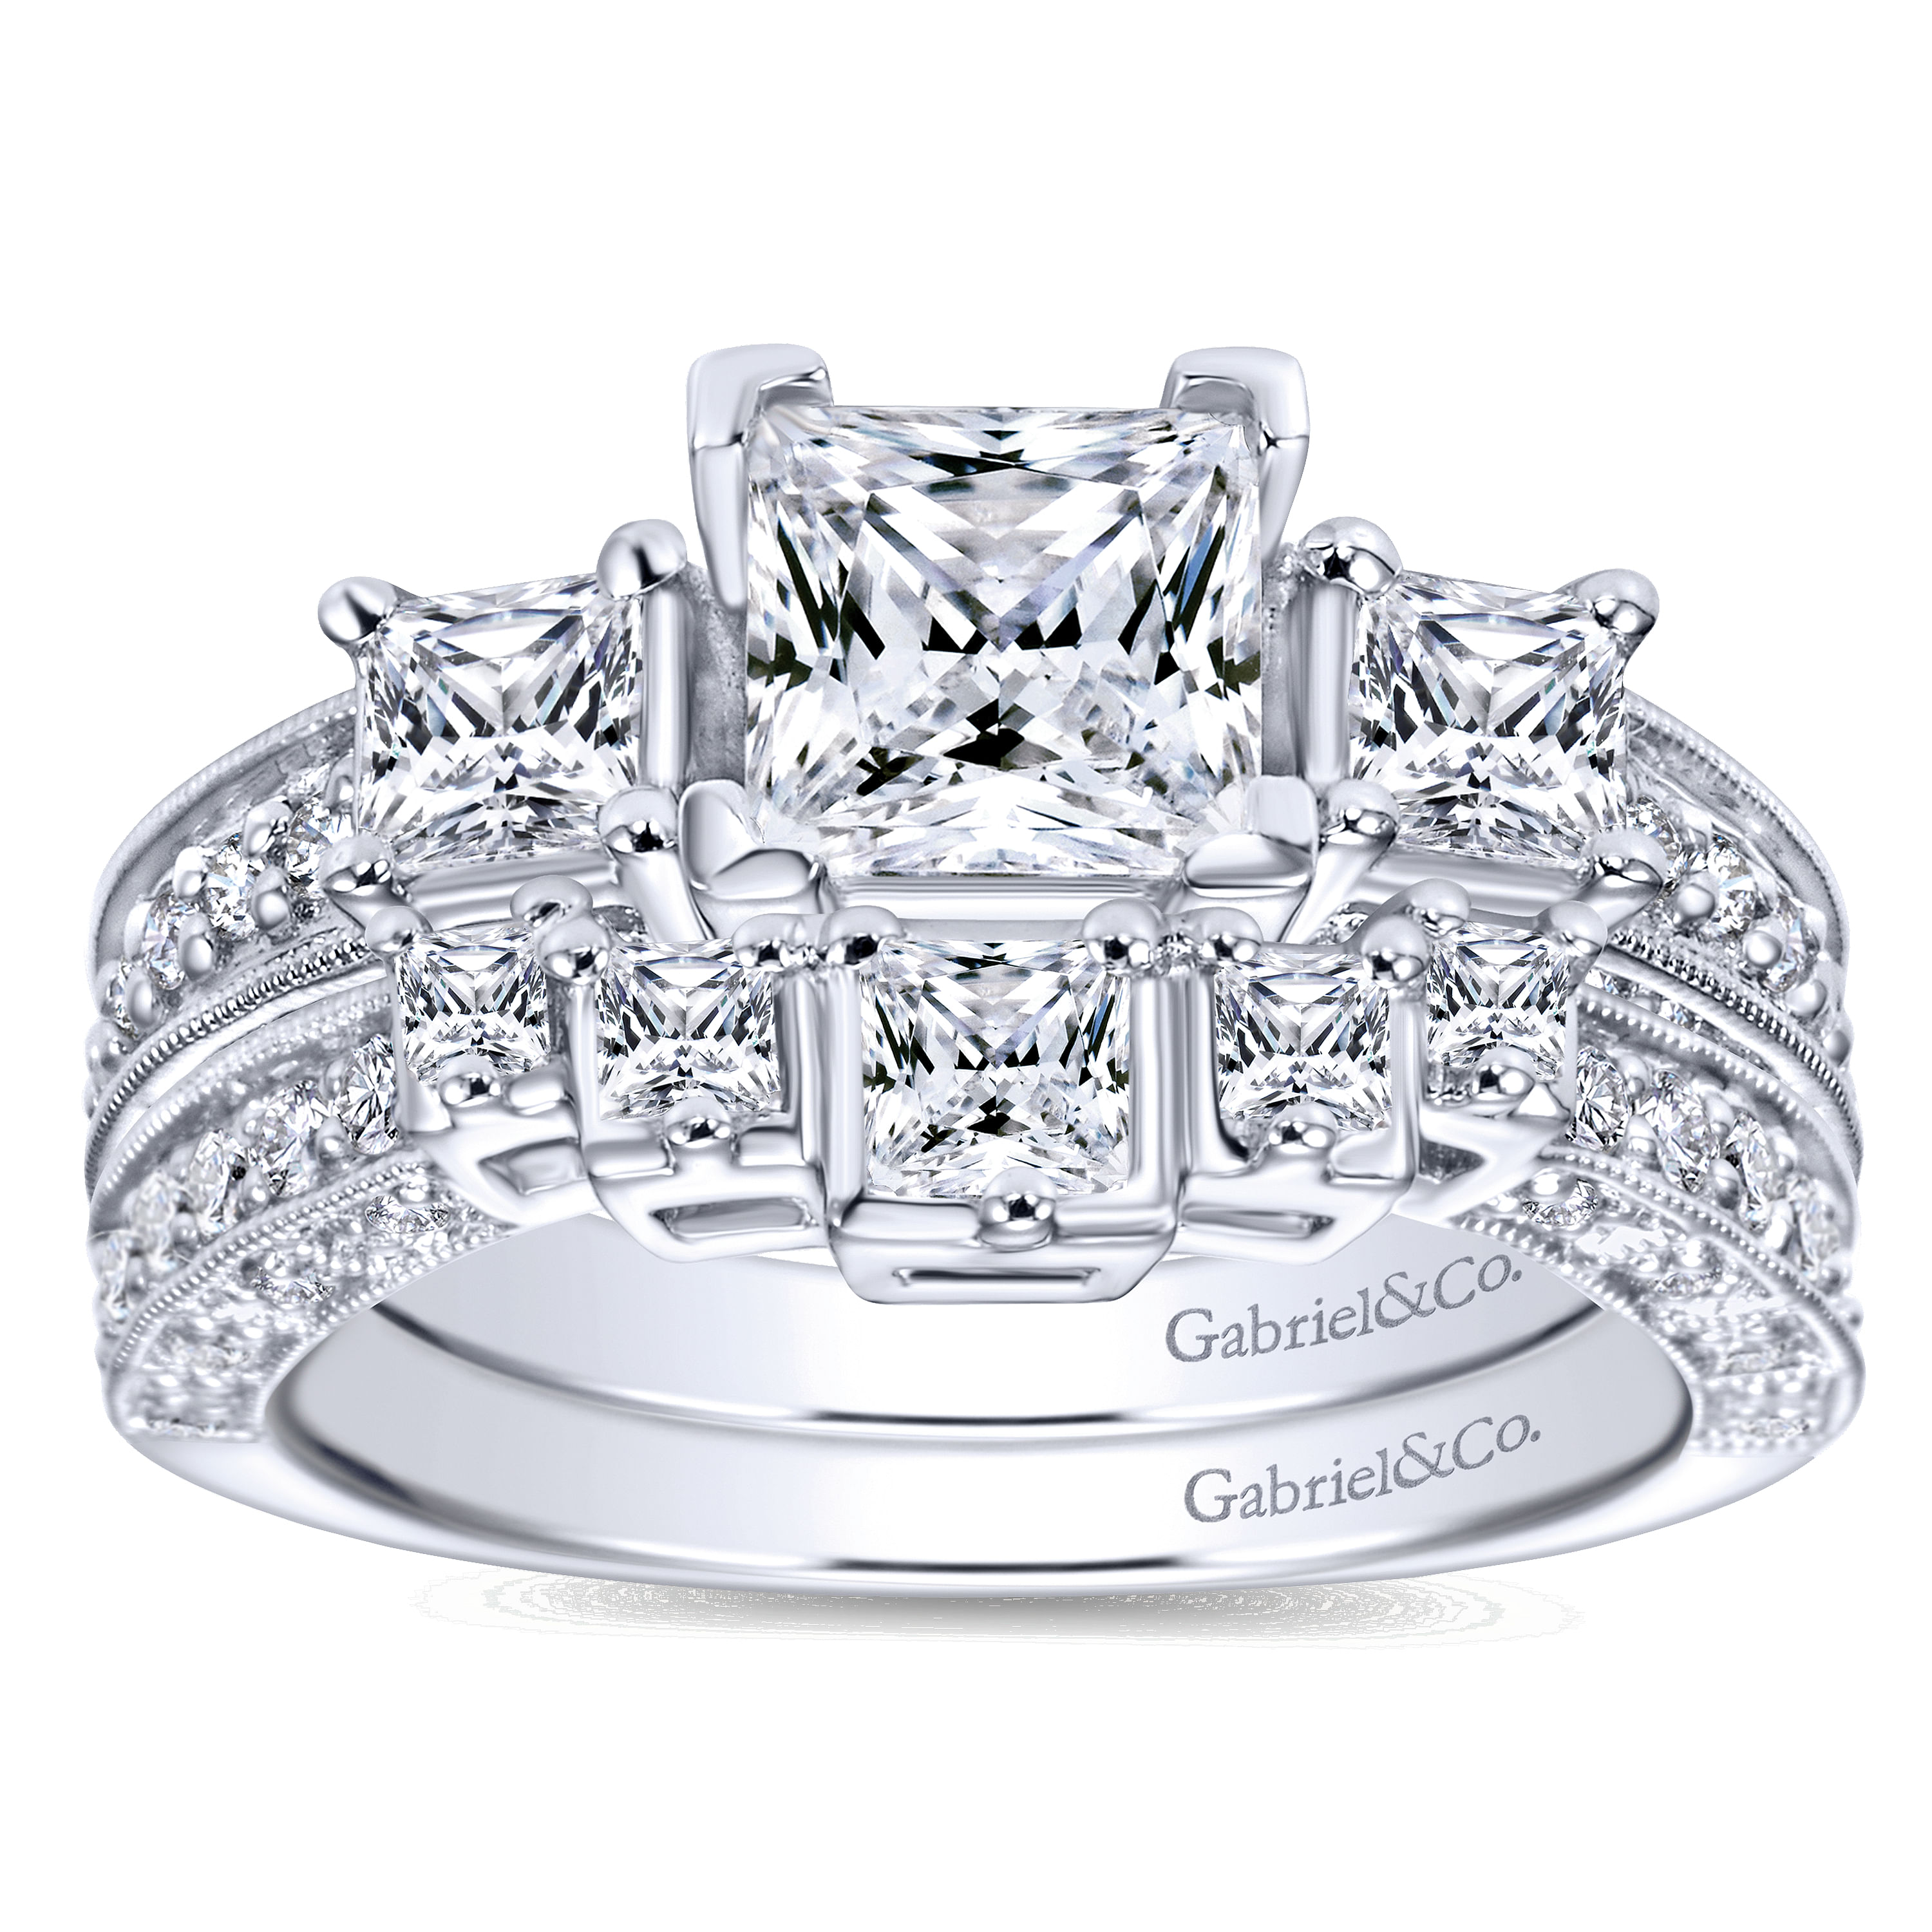 Vintage Inspired 14K White Gold Princess Cut Three Stone Diamond Engagement Ring